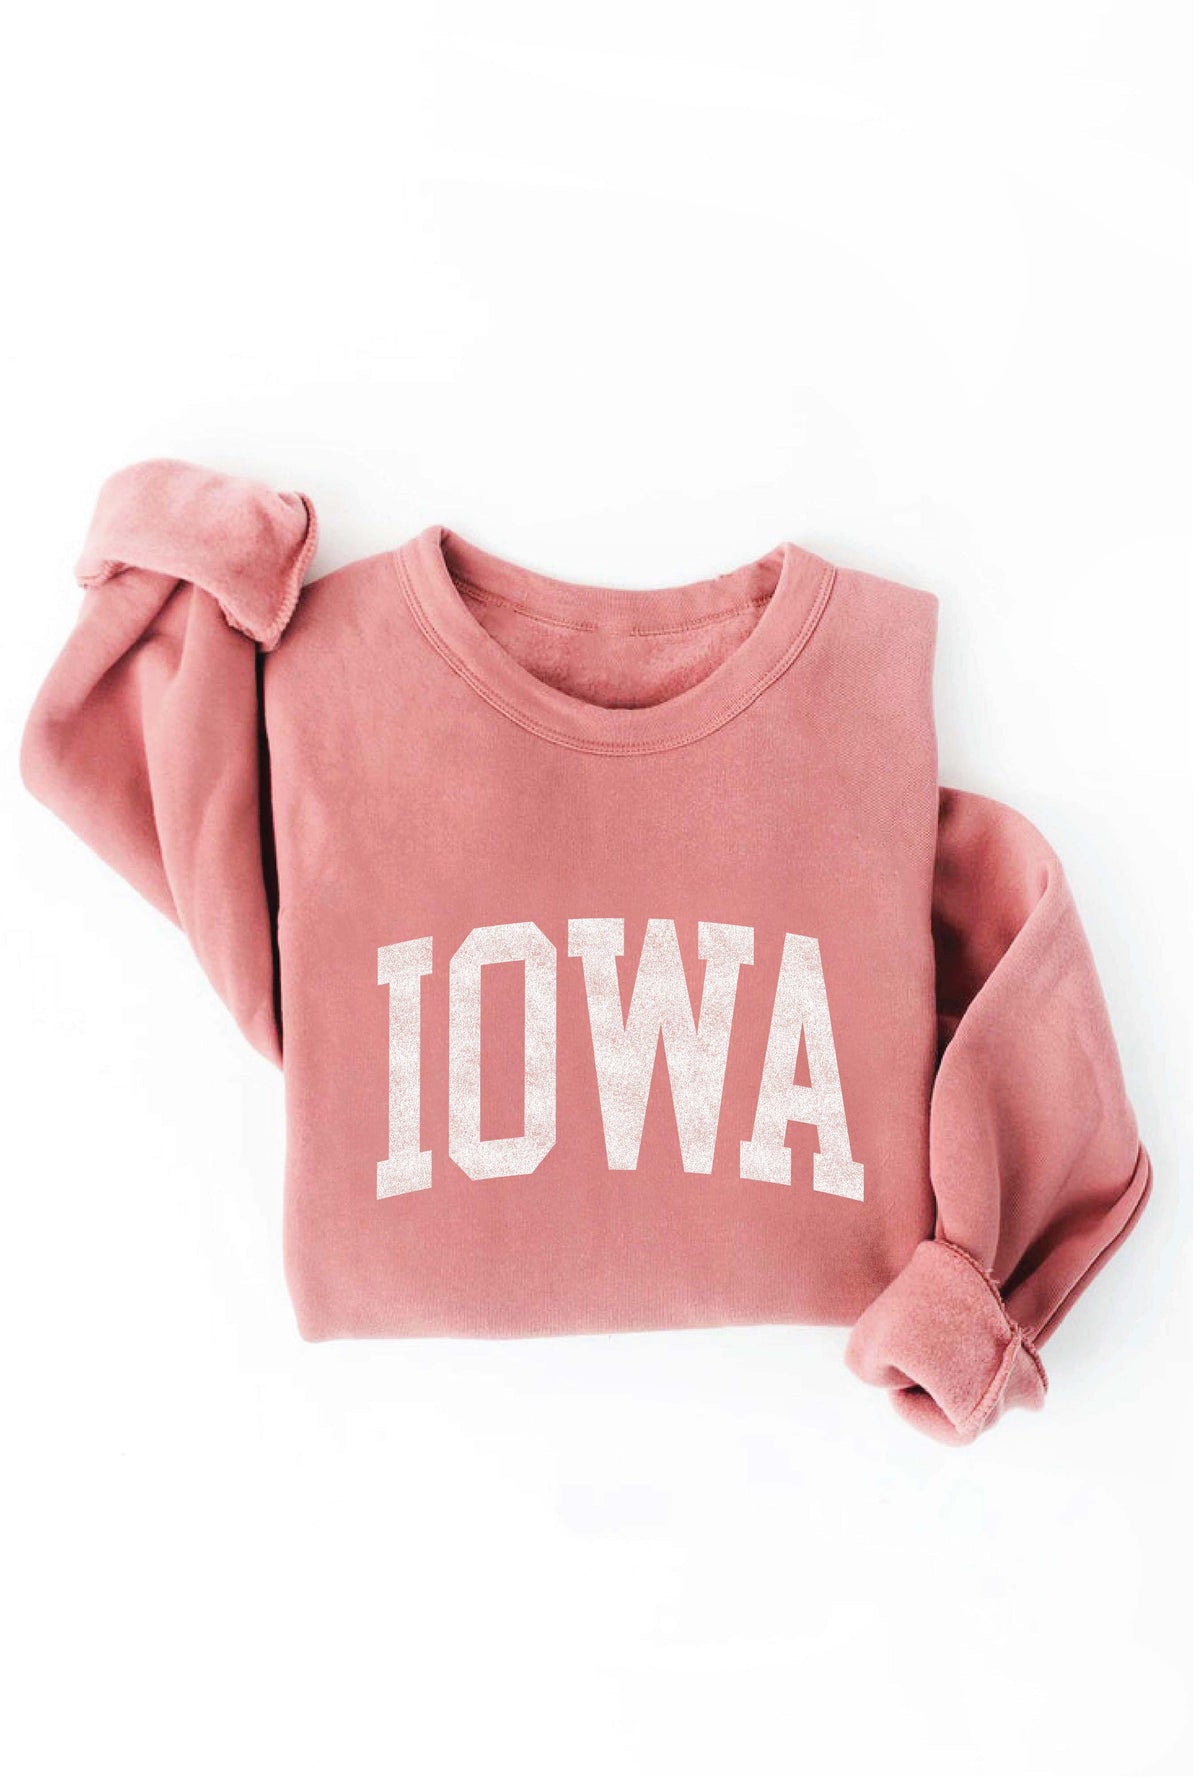 RESTOCK Plus Iowa Graphic Sweatshirt- (Mauve)